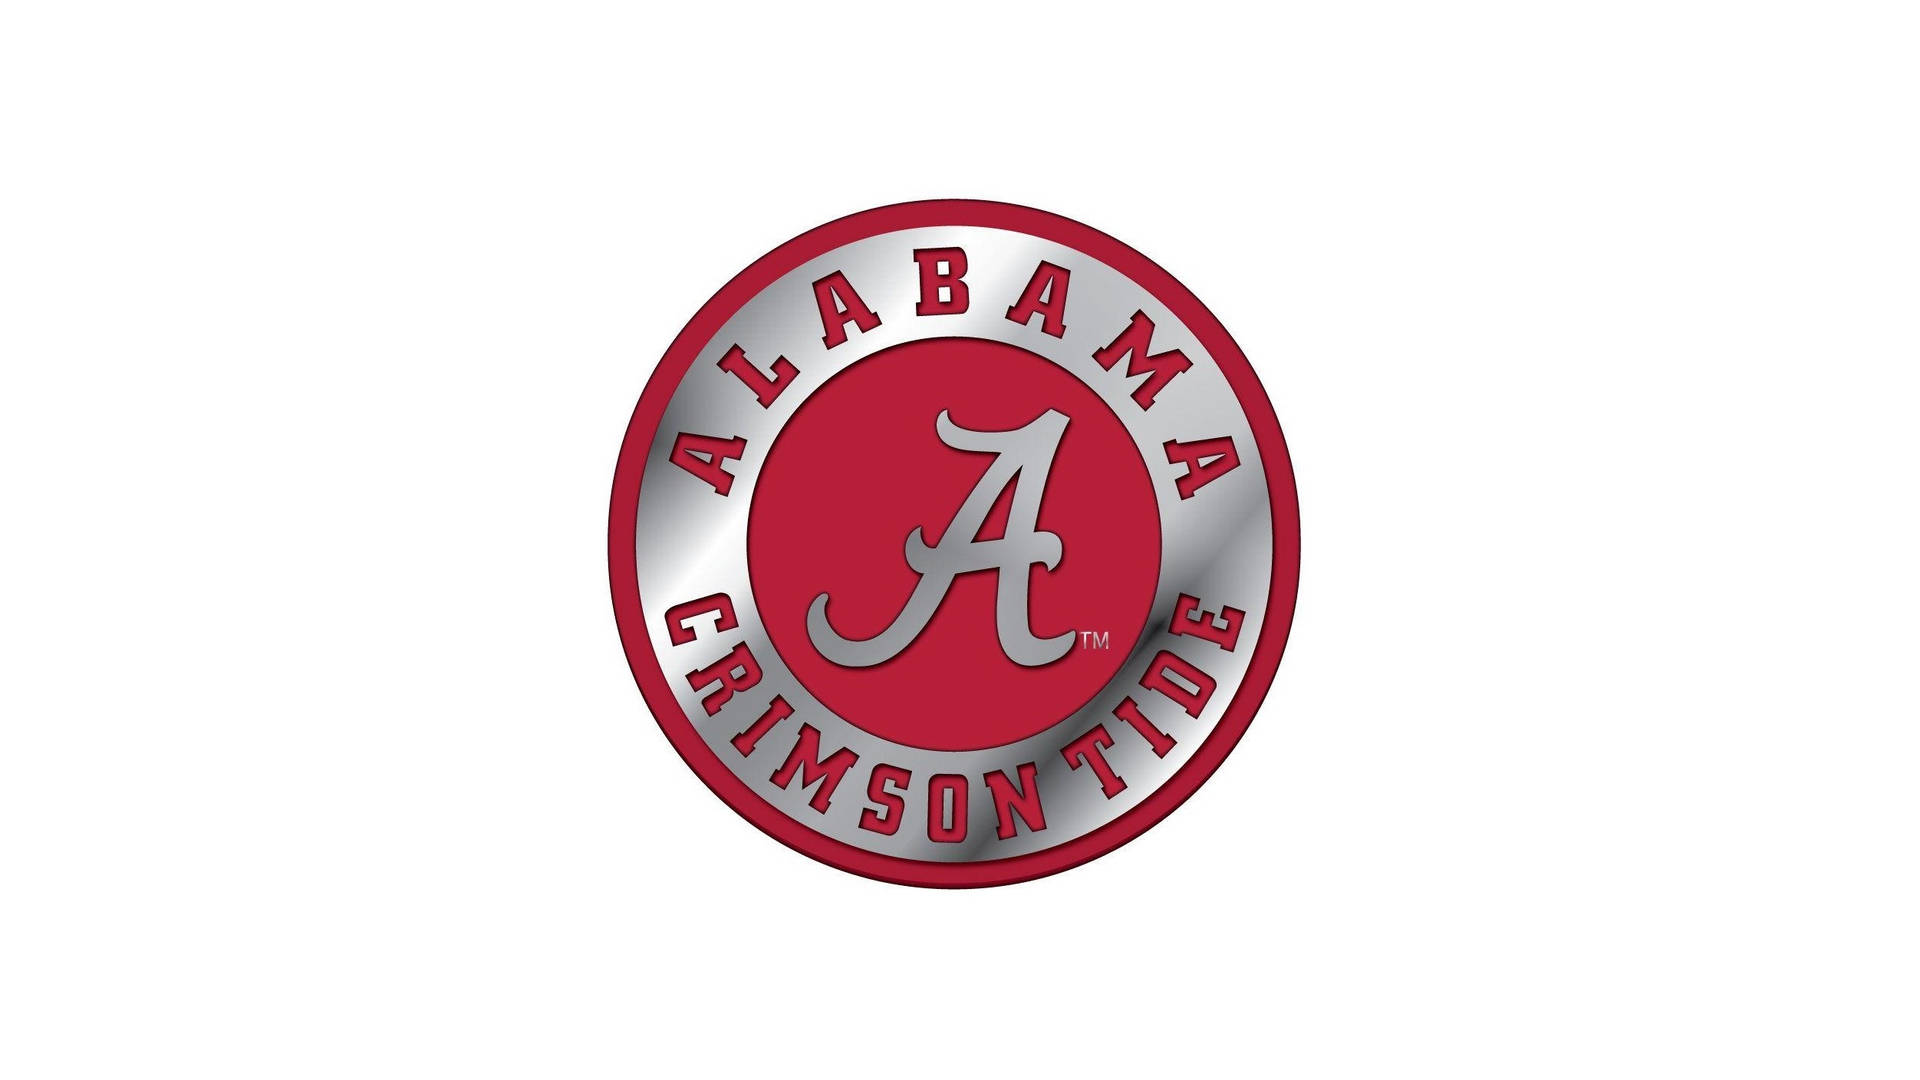 Caption: Exciting Alabama Crimson Tide Football Match